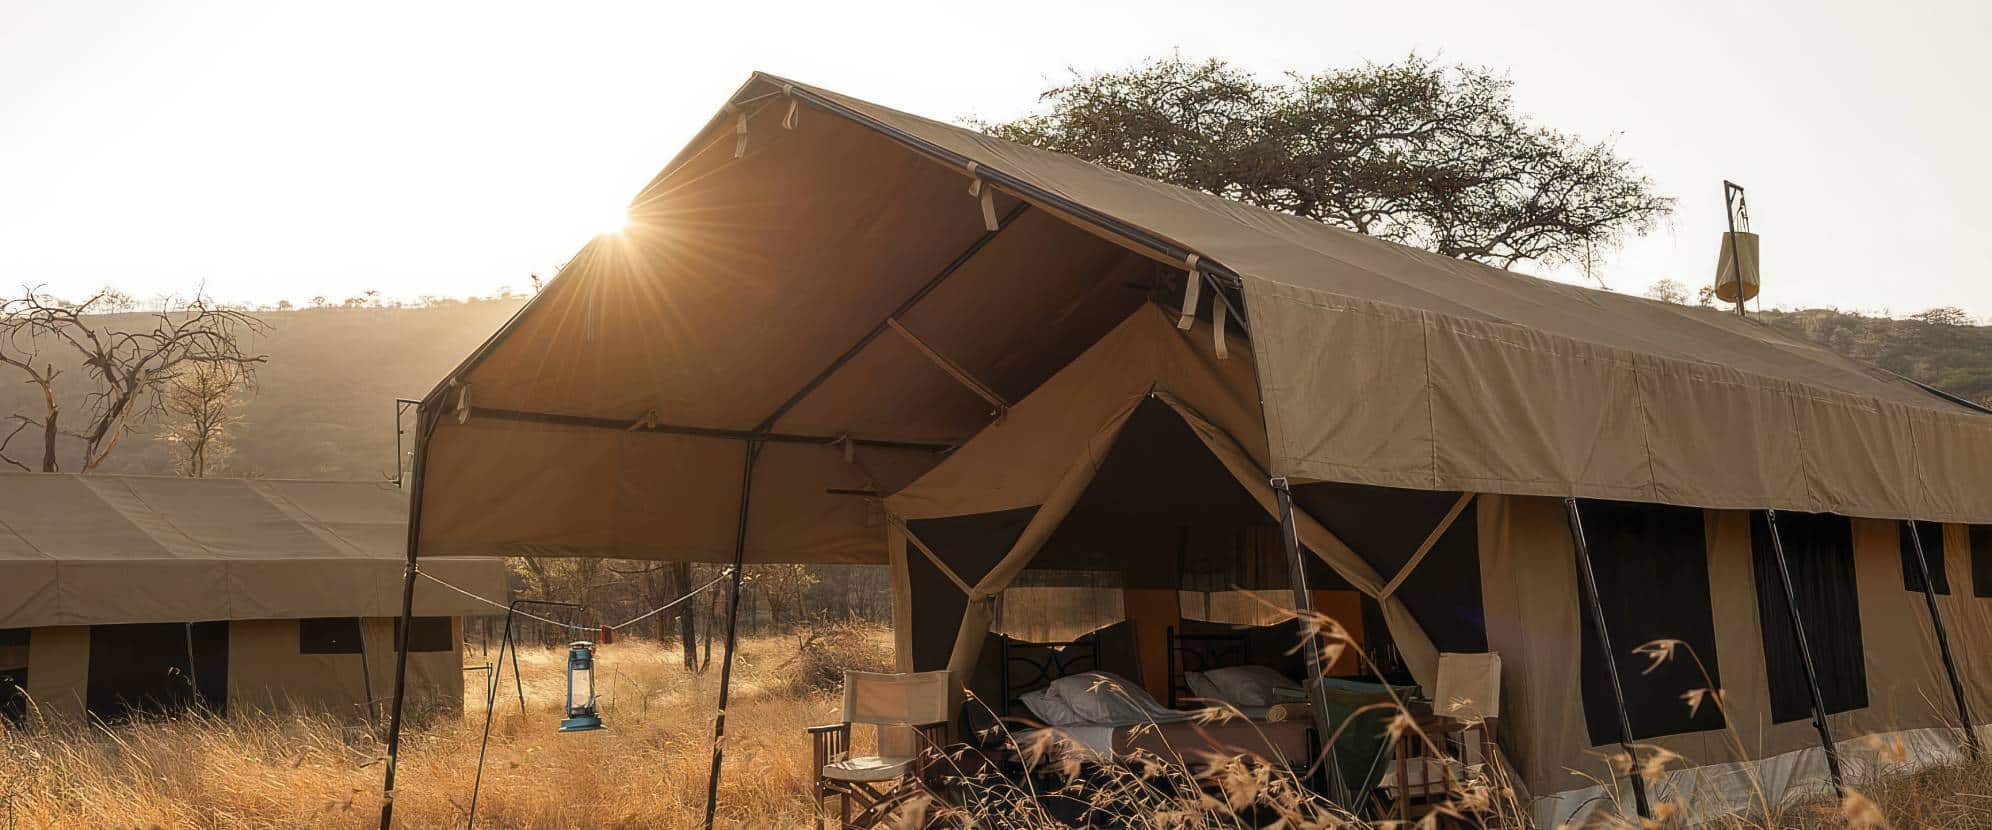 <a href="https://www. Easytravel. Co. Tz/accommodation/ndutu-kati-kati-tented-camp/"> ndutu kati kati campamento de tiendas de campaña  </a>